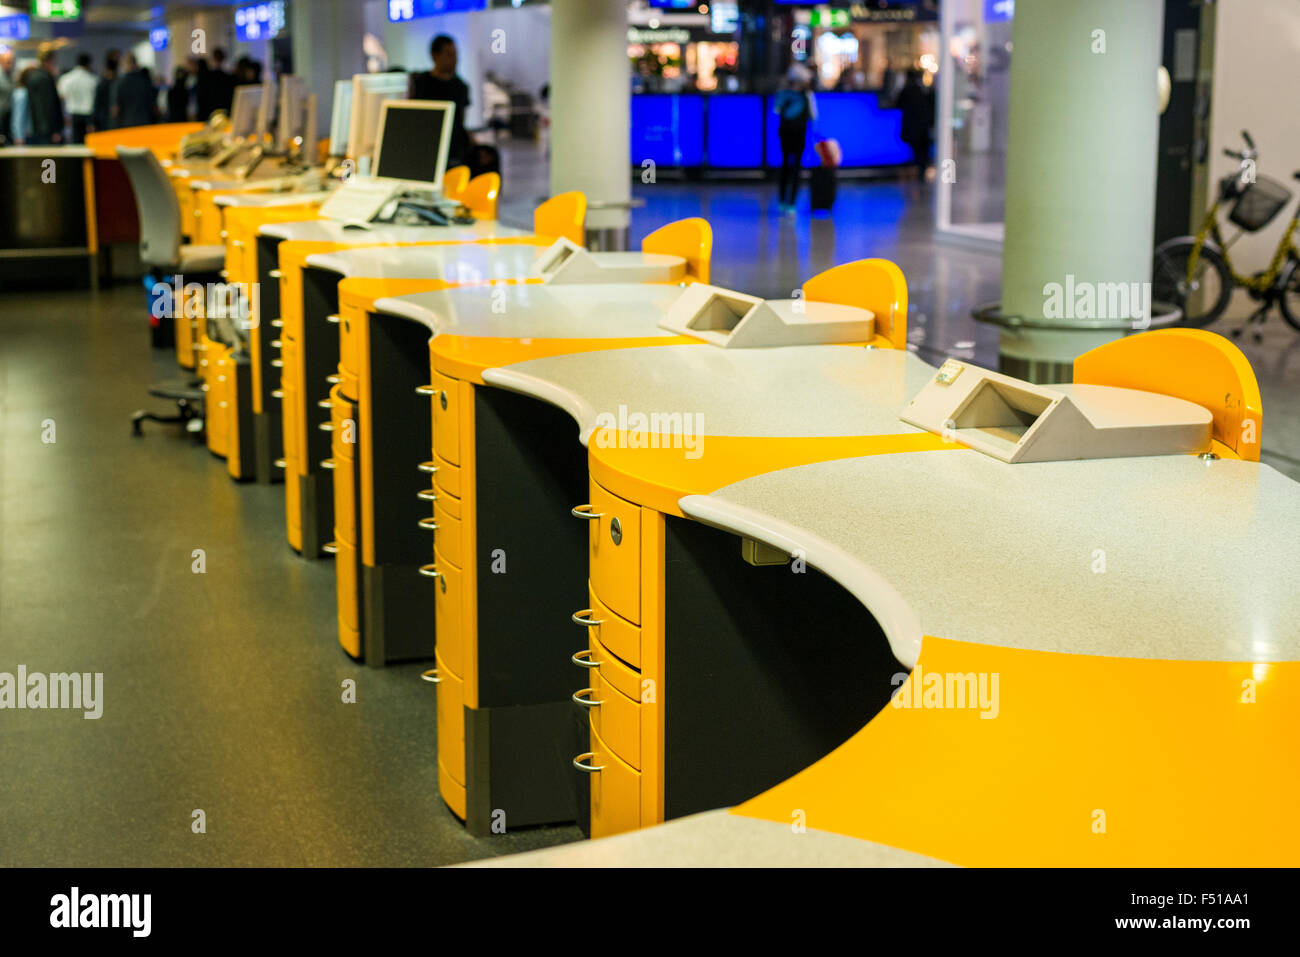 Deserted information desks of the airline Lufthansa at Terminal 1 of Frankfurt International Airport Stock Photo